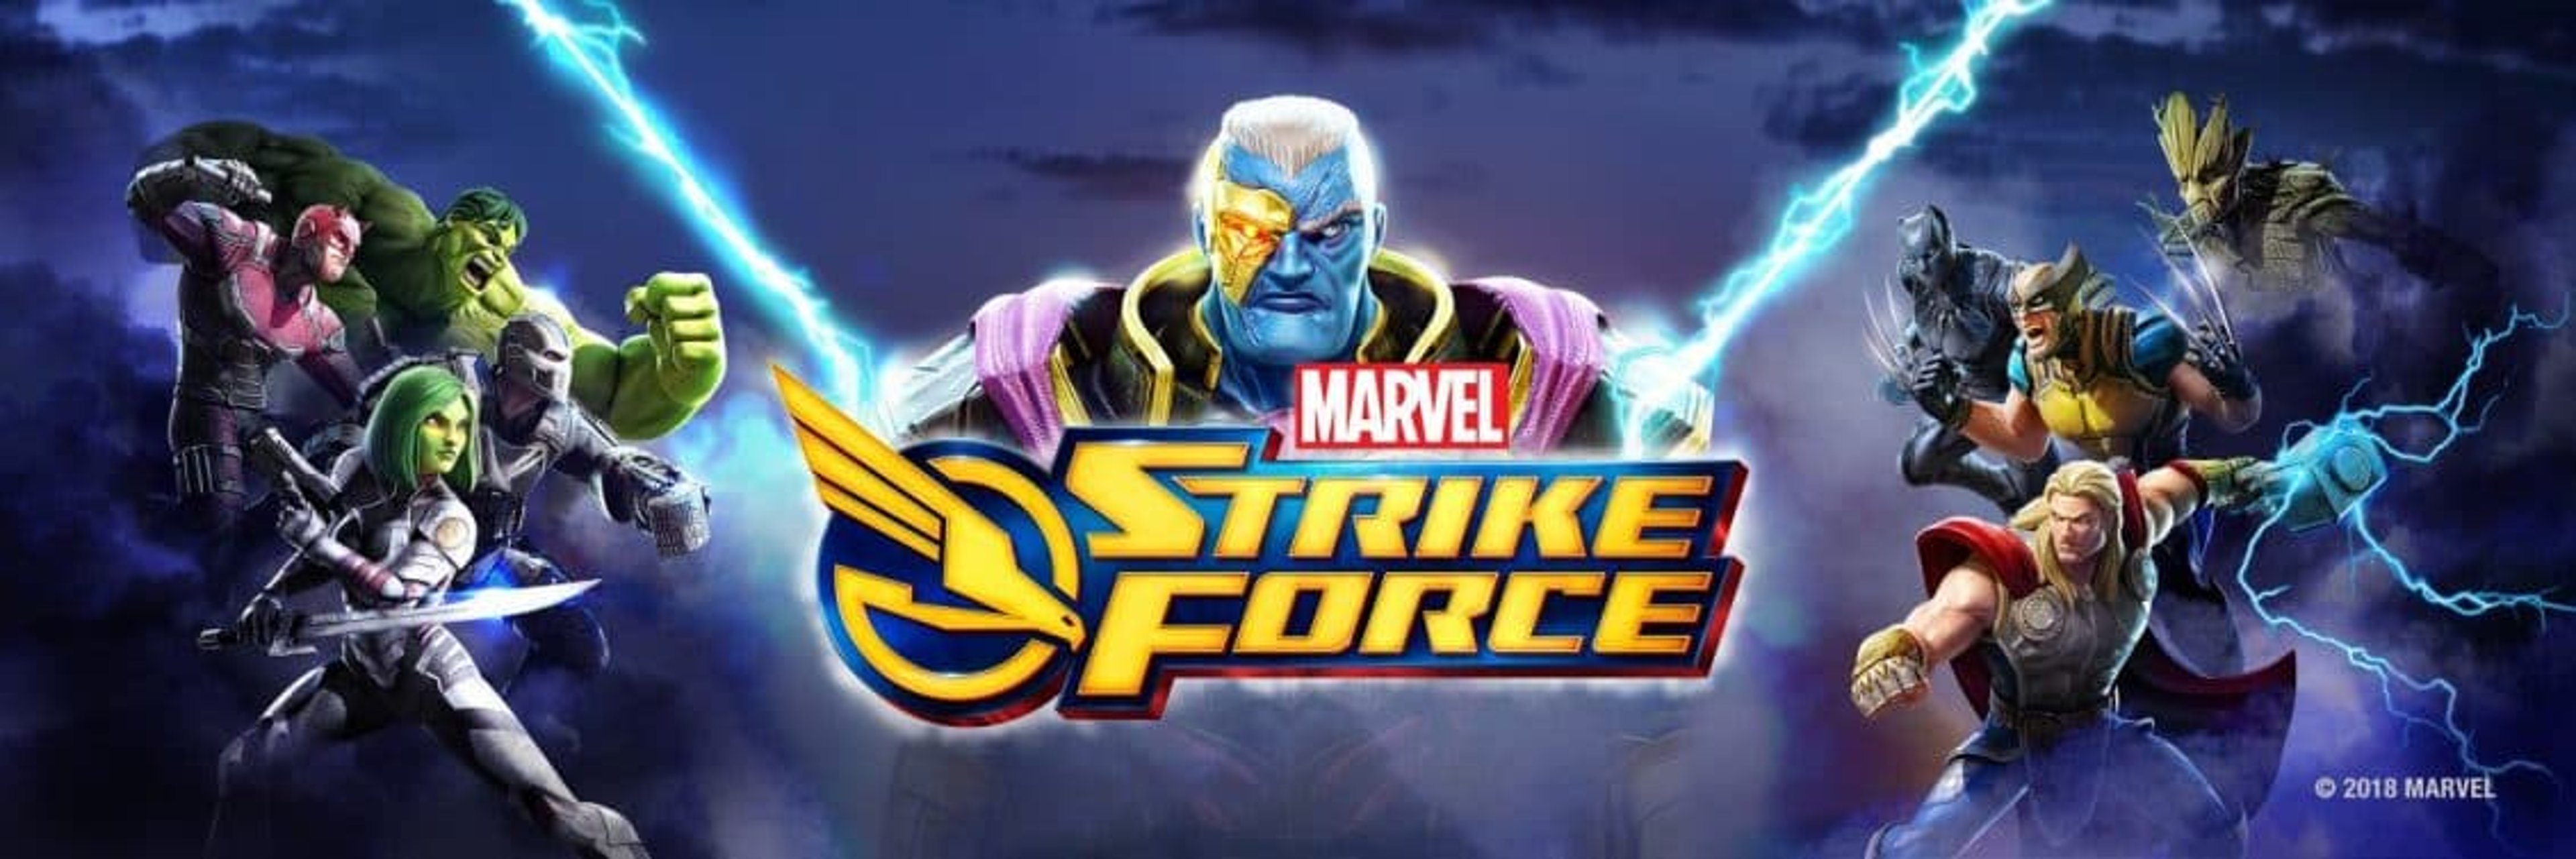 Marvel Strike Force – La Recensione